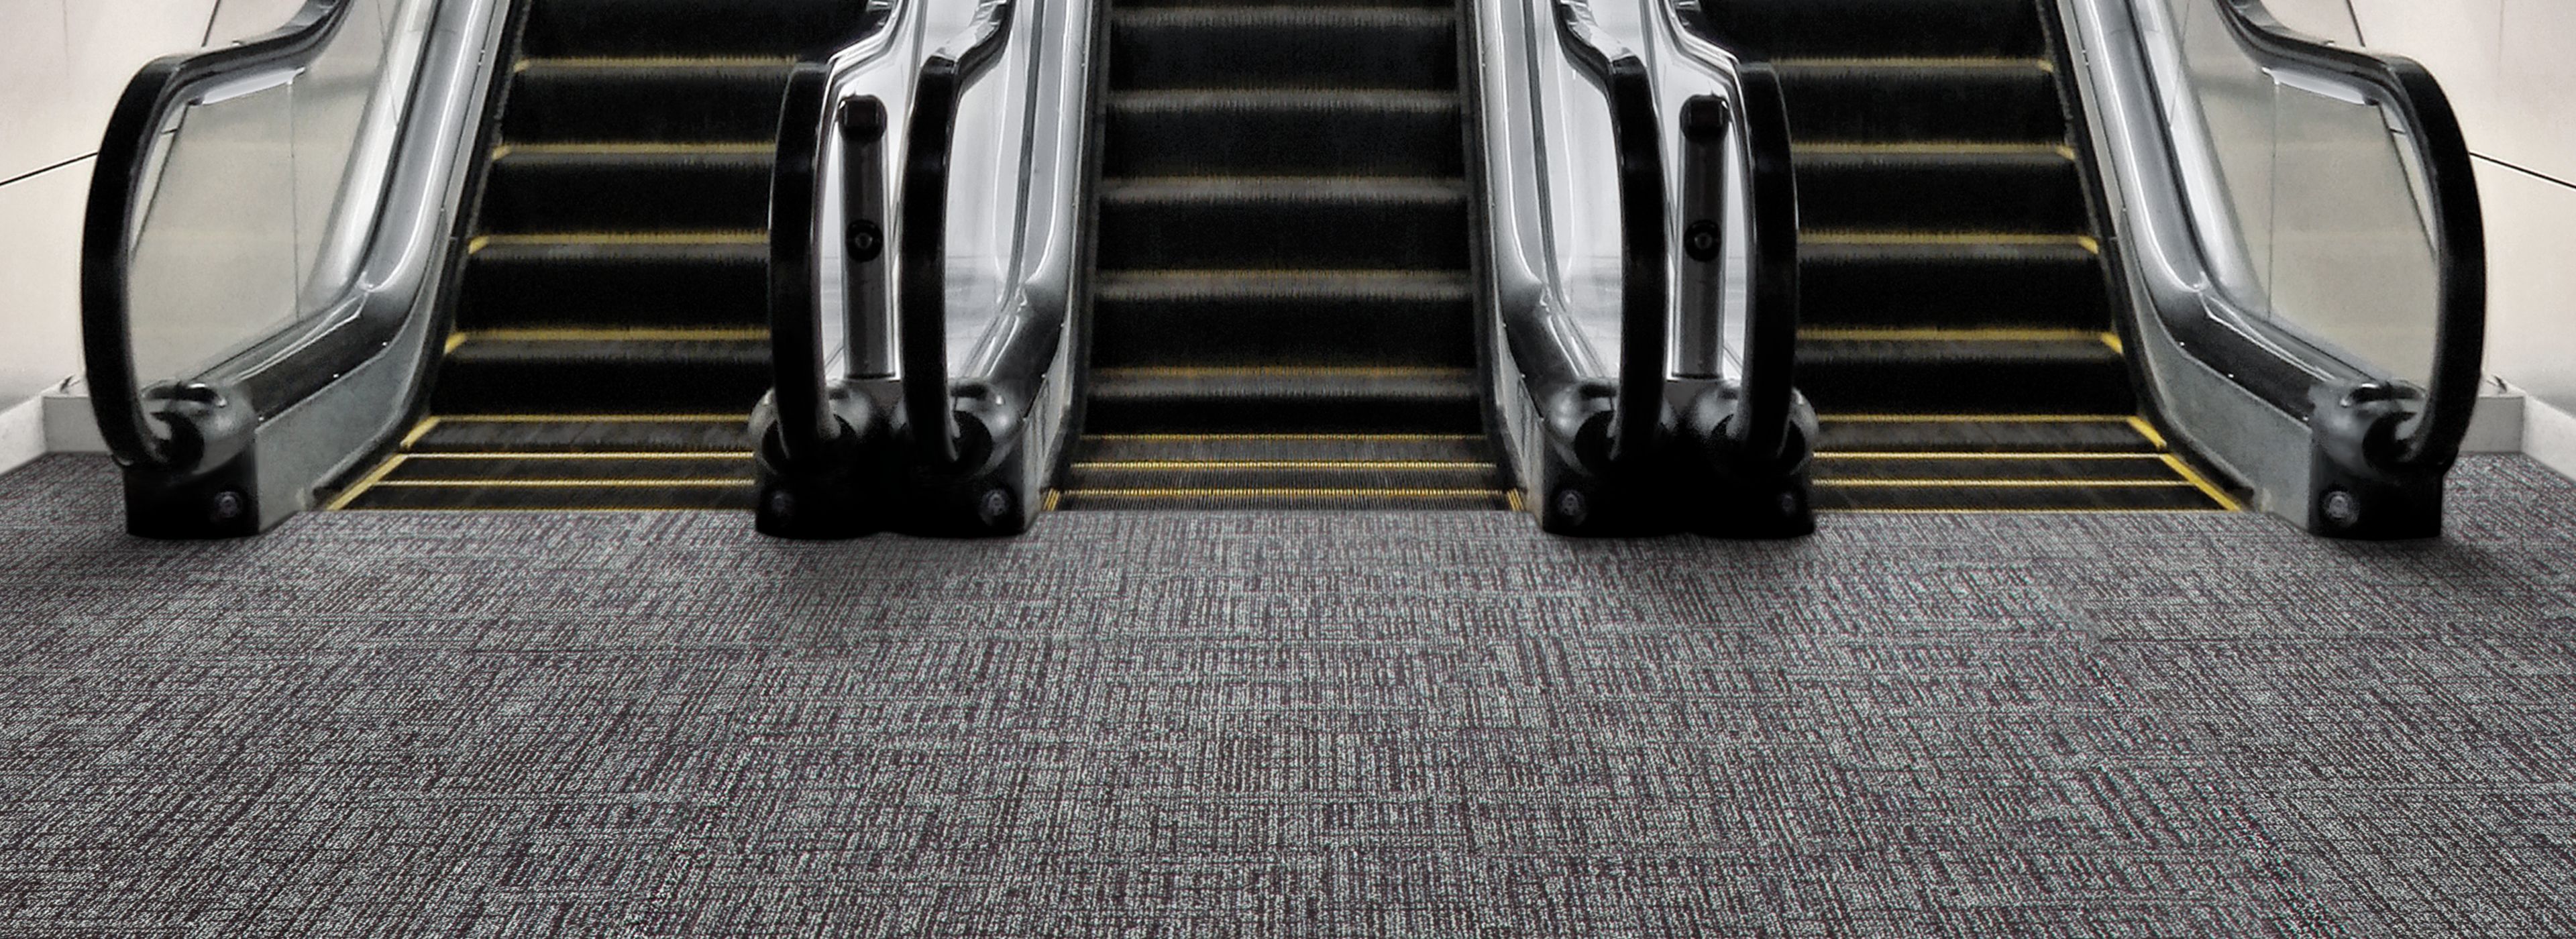 Interface SR899 carpet tile with escalator image number 1